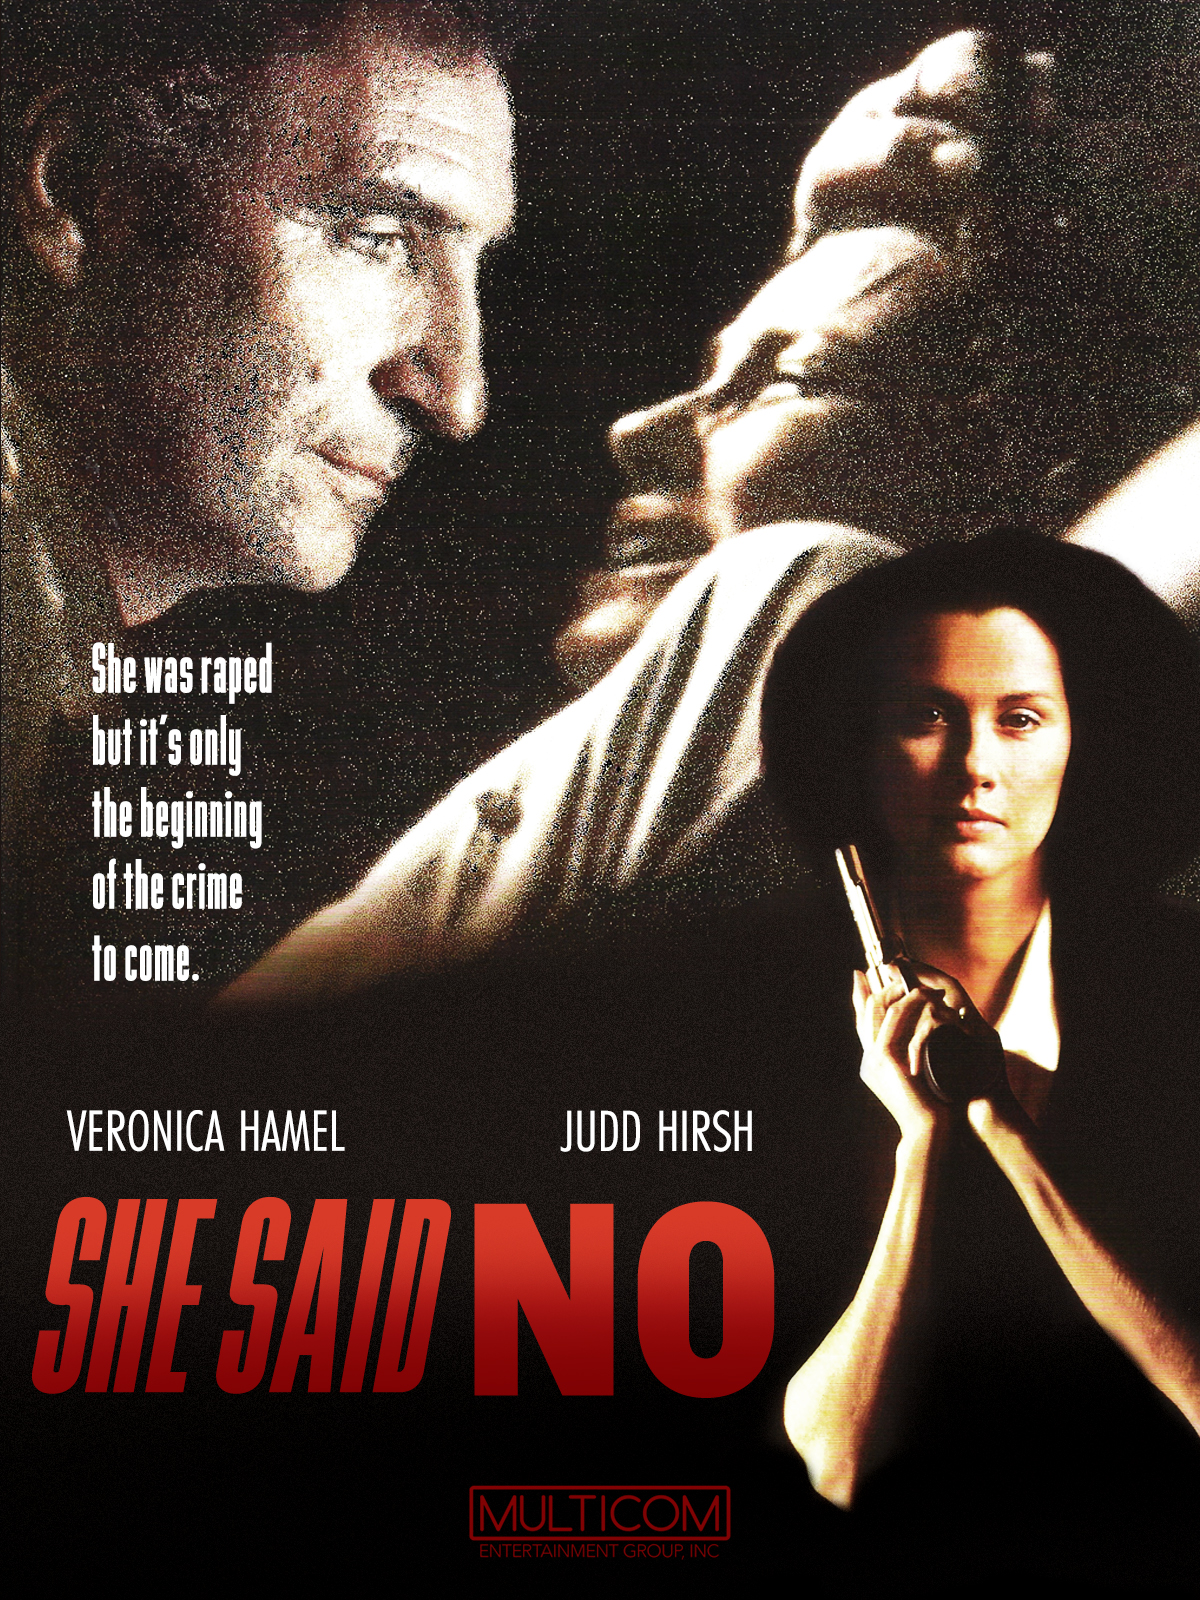 She Said No (1990) starring Veronica Hamel on DVD on DVD